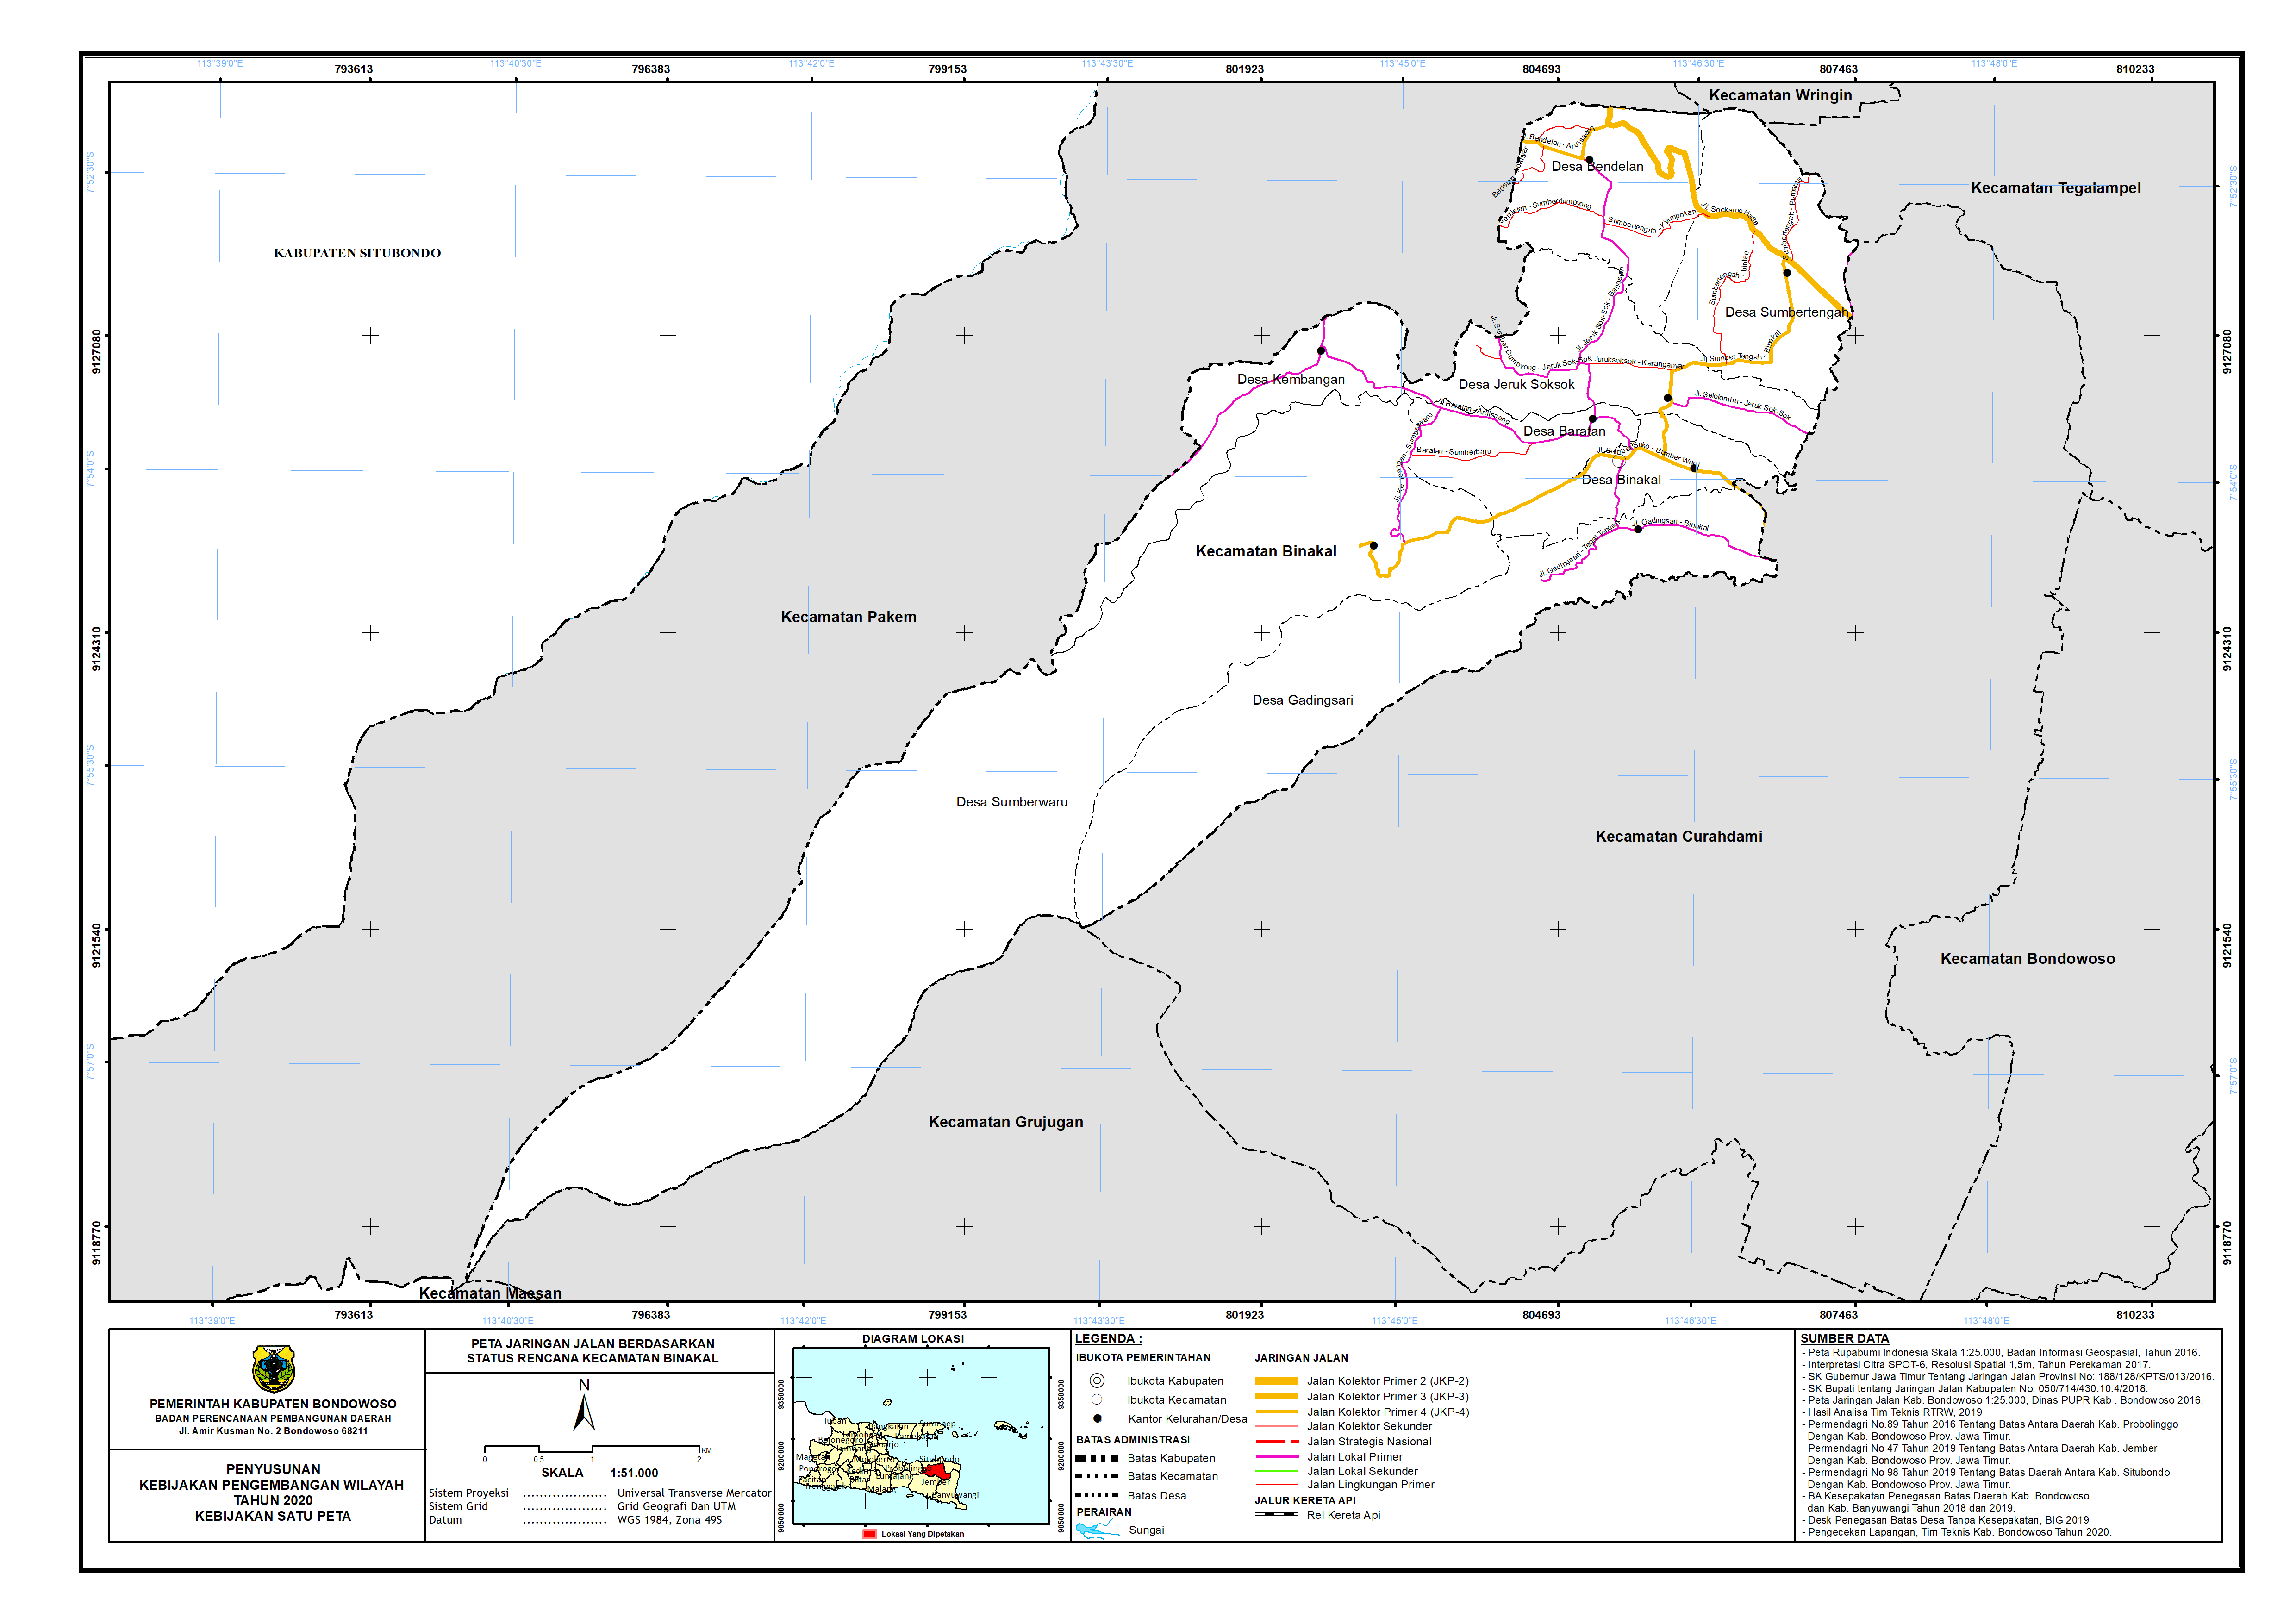 Peta Jaringan Jalan Berdasarkan Status Rencana Kecamatan Binakal.png